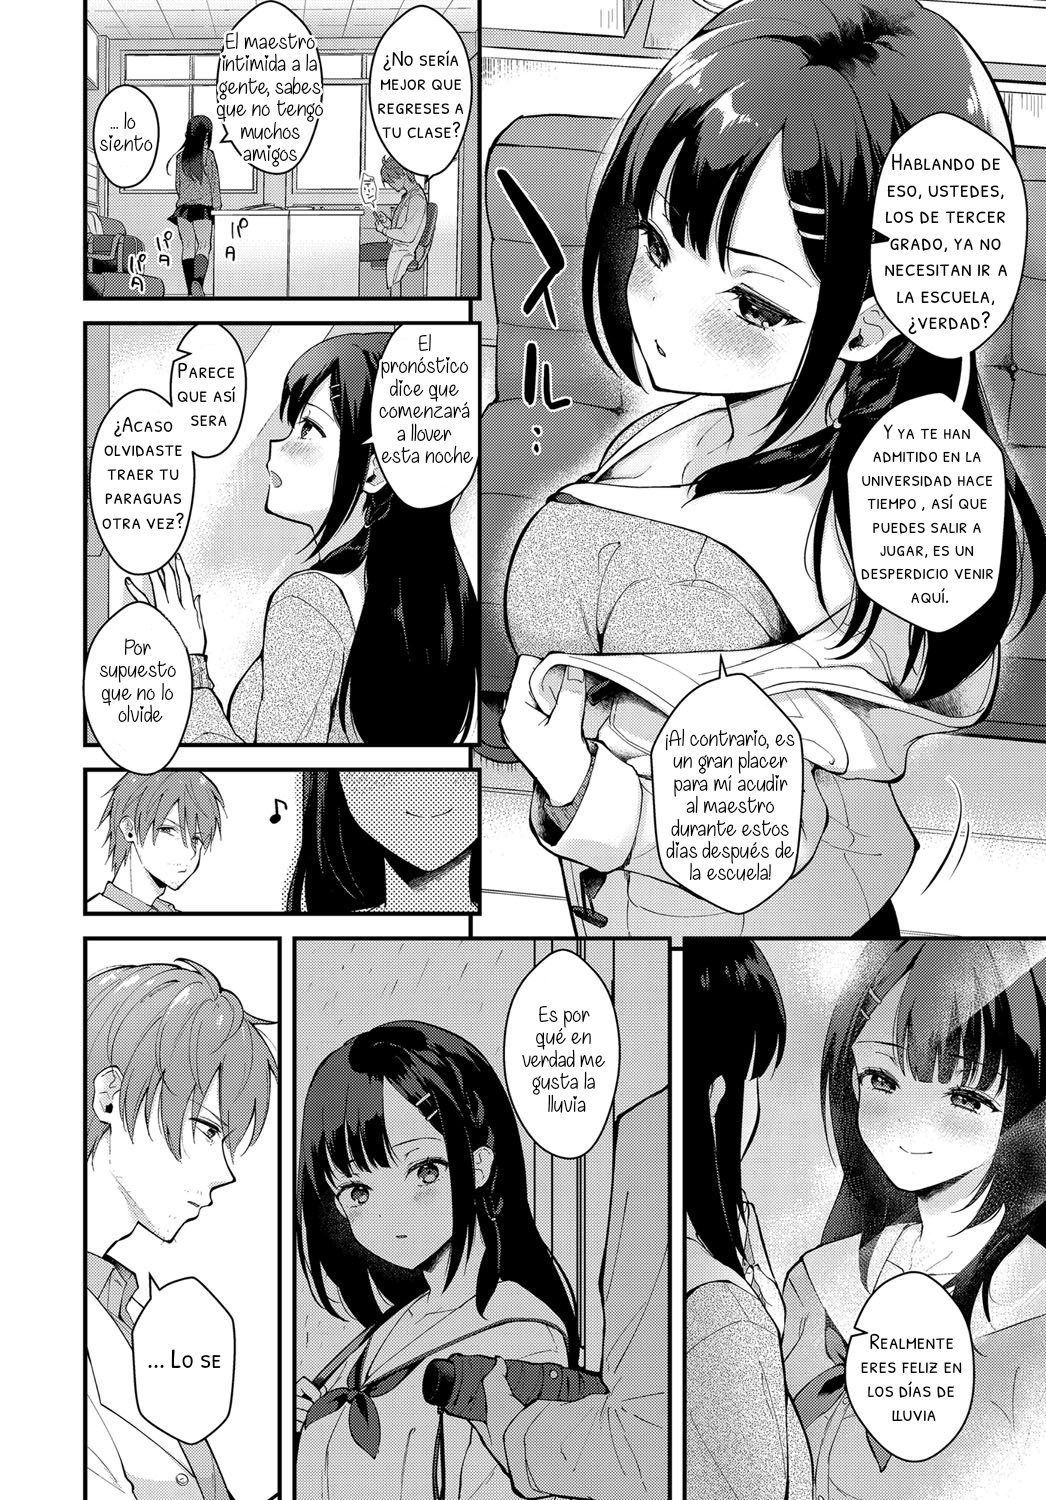 Sangatsu no Ame - Rain of March- JK Miyako no Valentine Manga cap 2 - 1